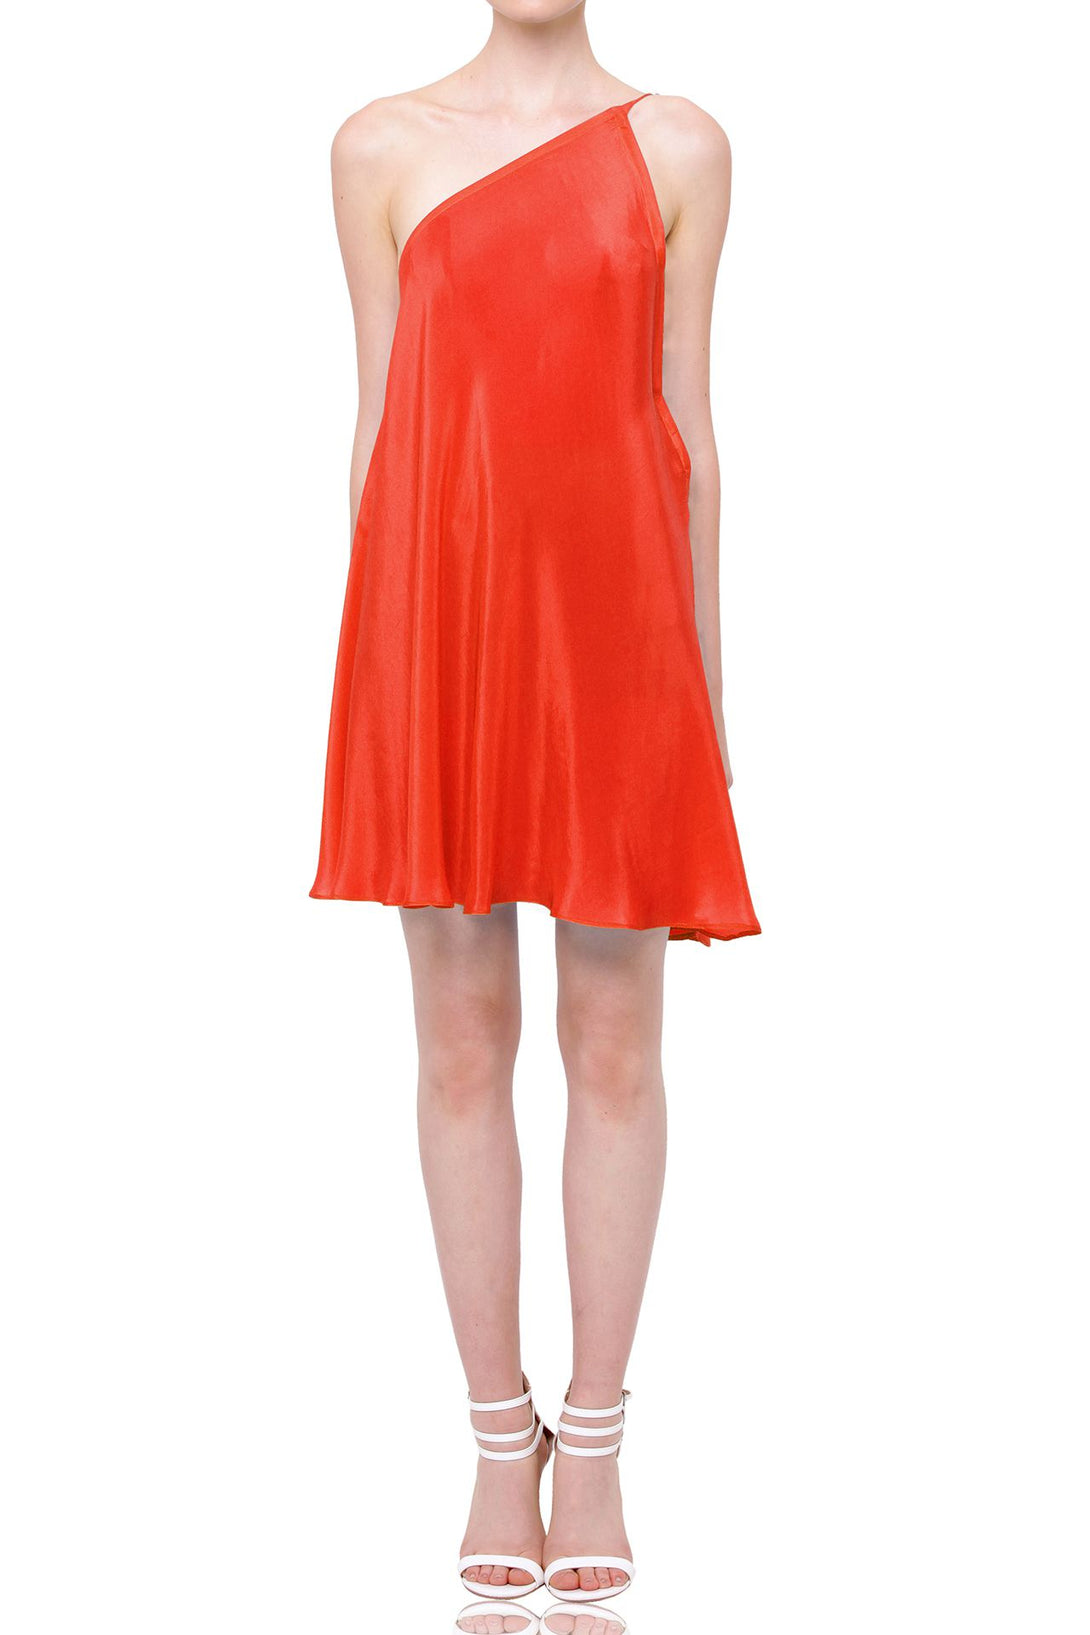  mini red satin dress, Shahida Parides, sexy mini dresses for women, sleeveless mini dress,